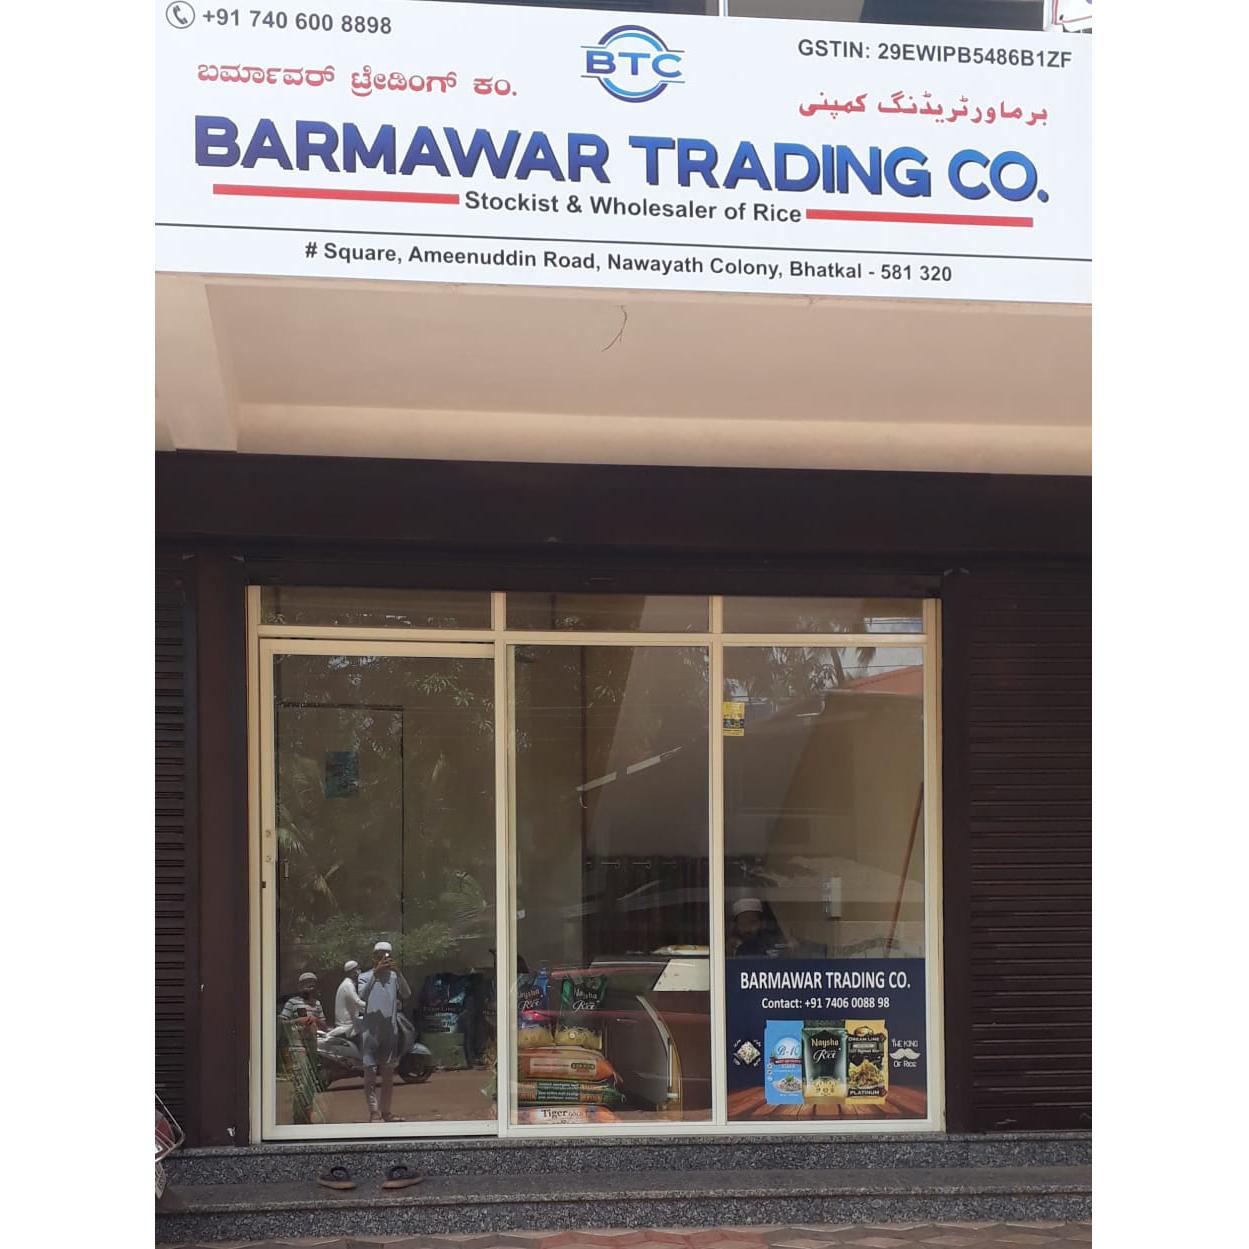 Barmawar trading co.